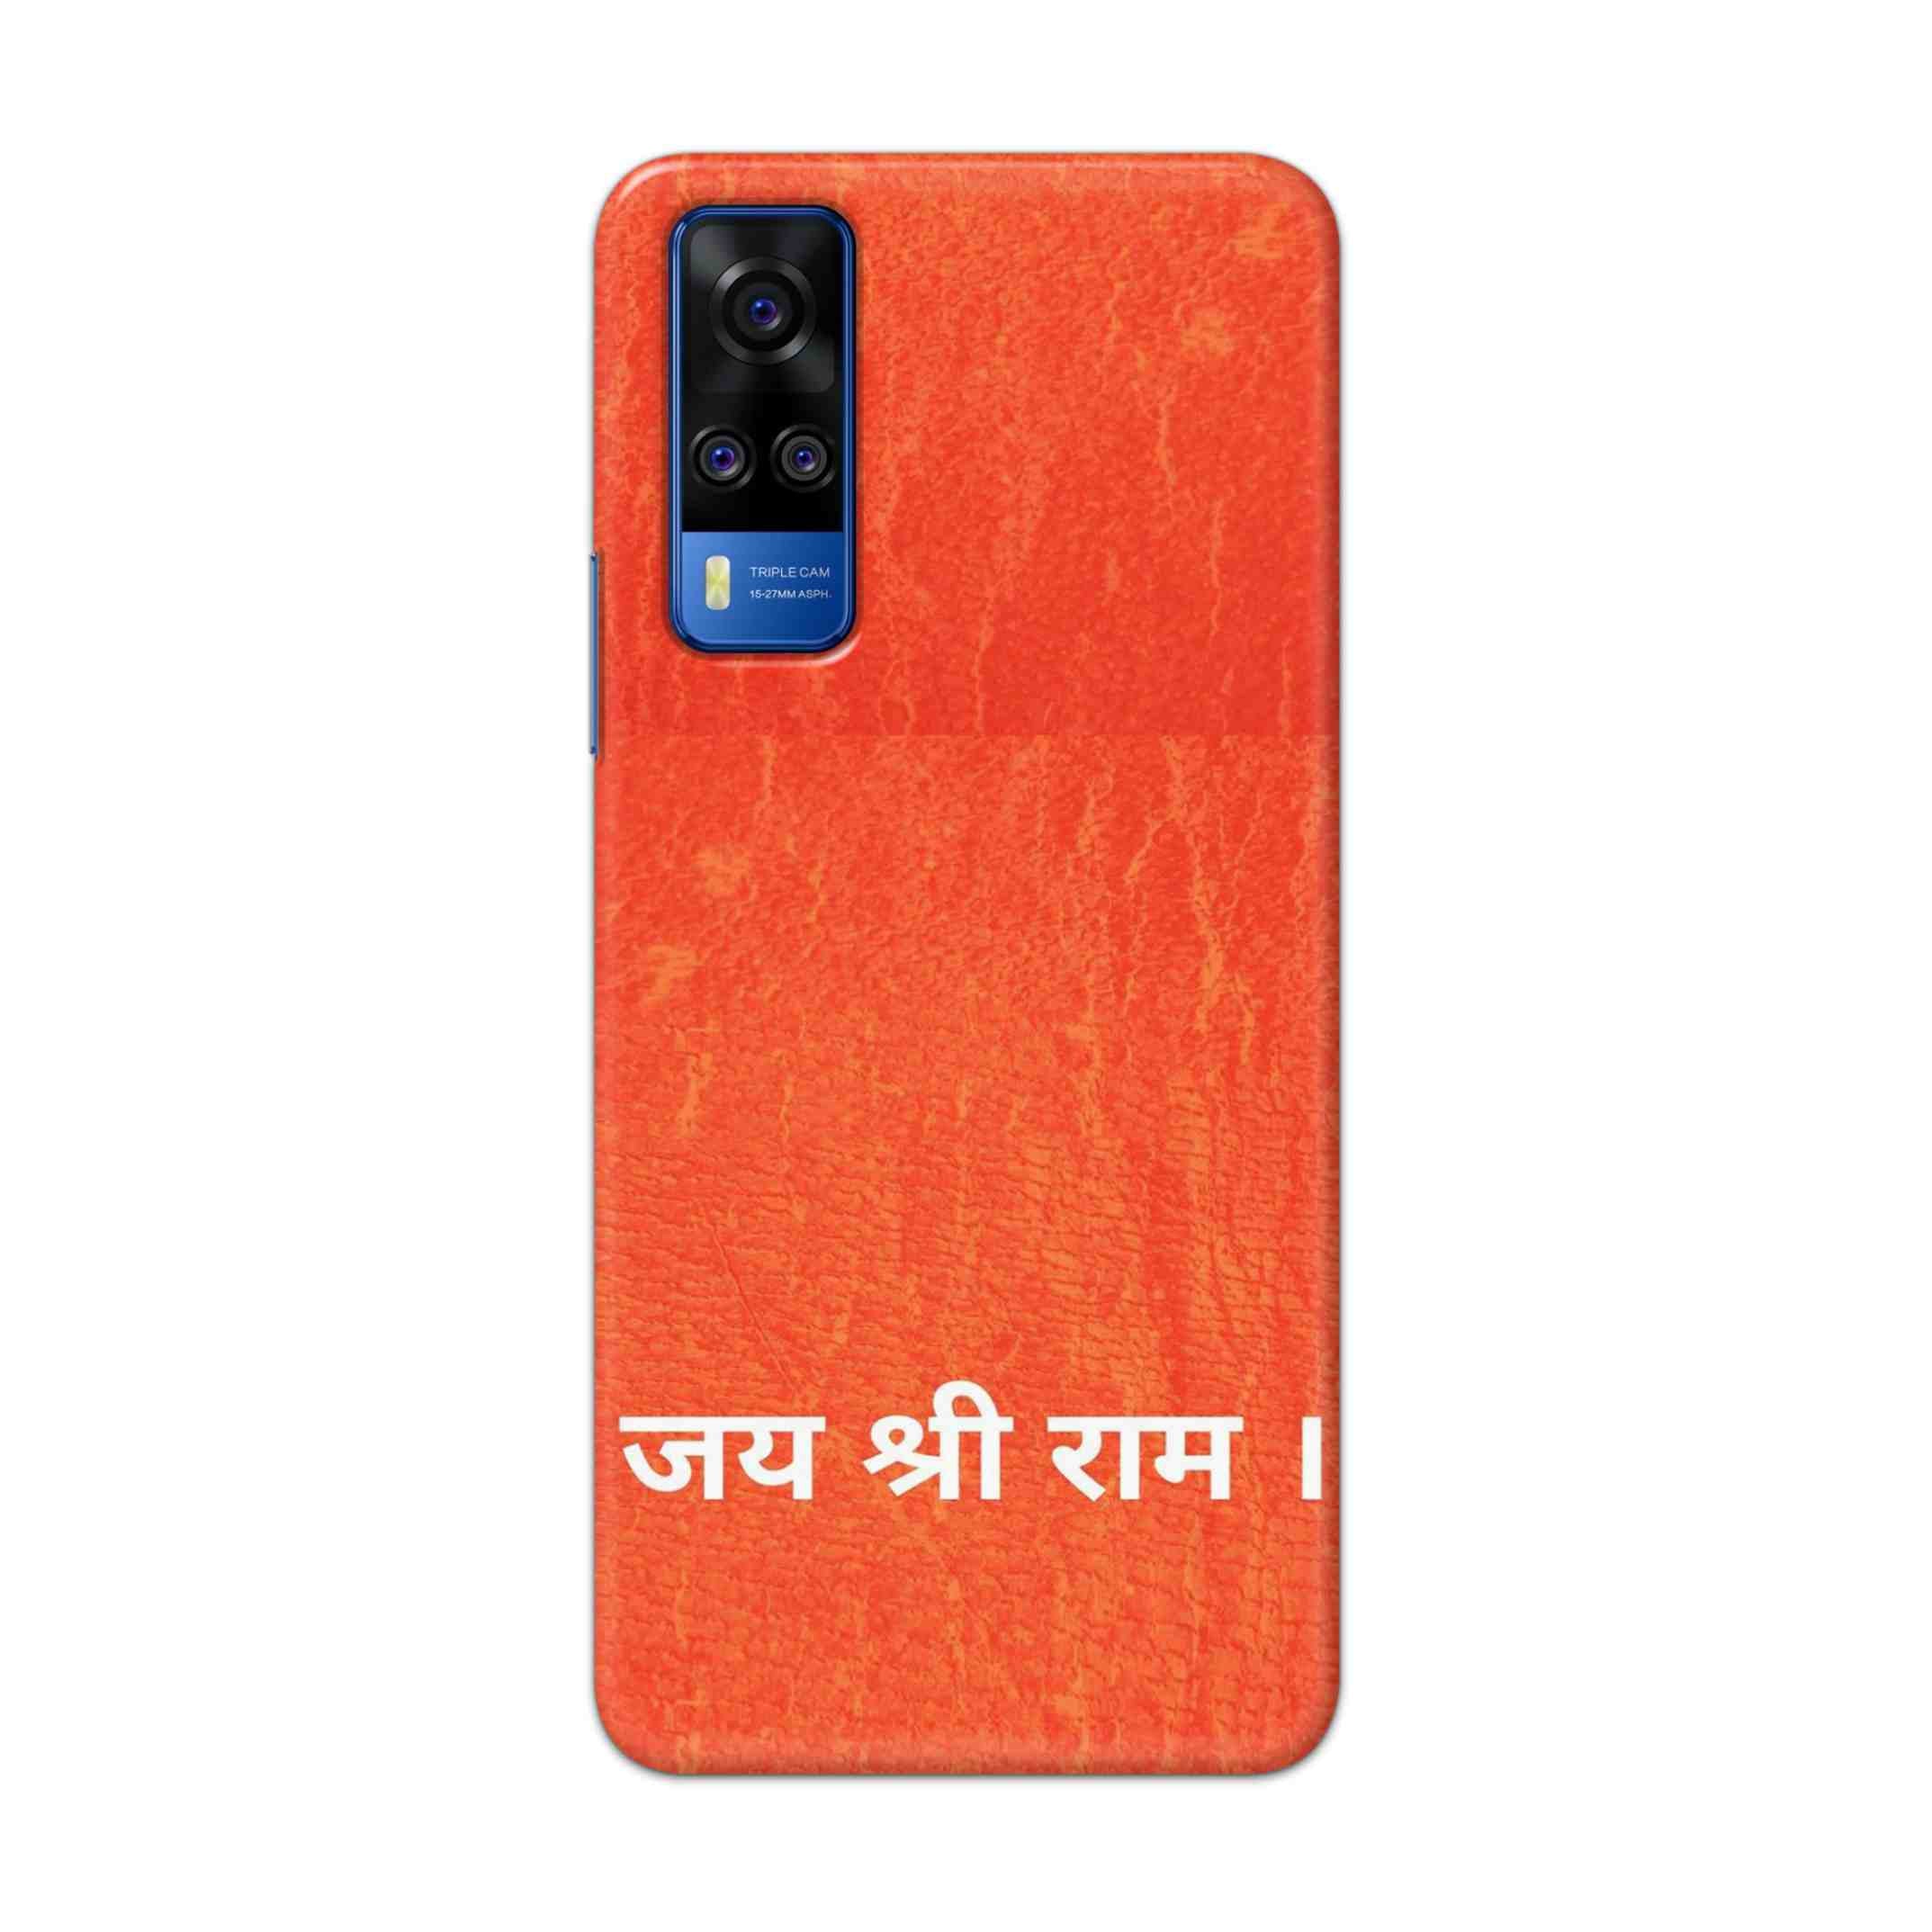 Buy Jai Shree Ram Hard Back Mobile Phone Case Cover For Vivo Y51a Online